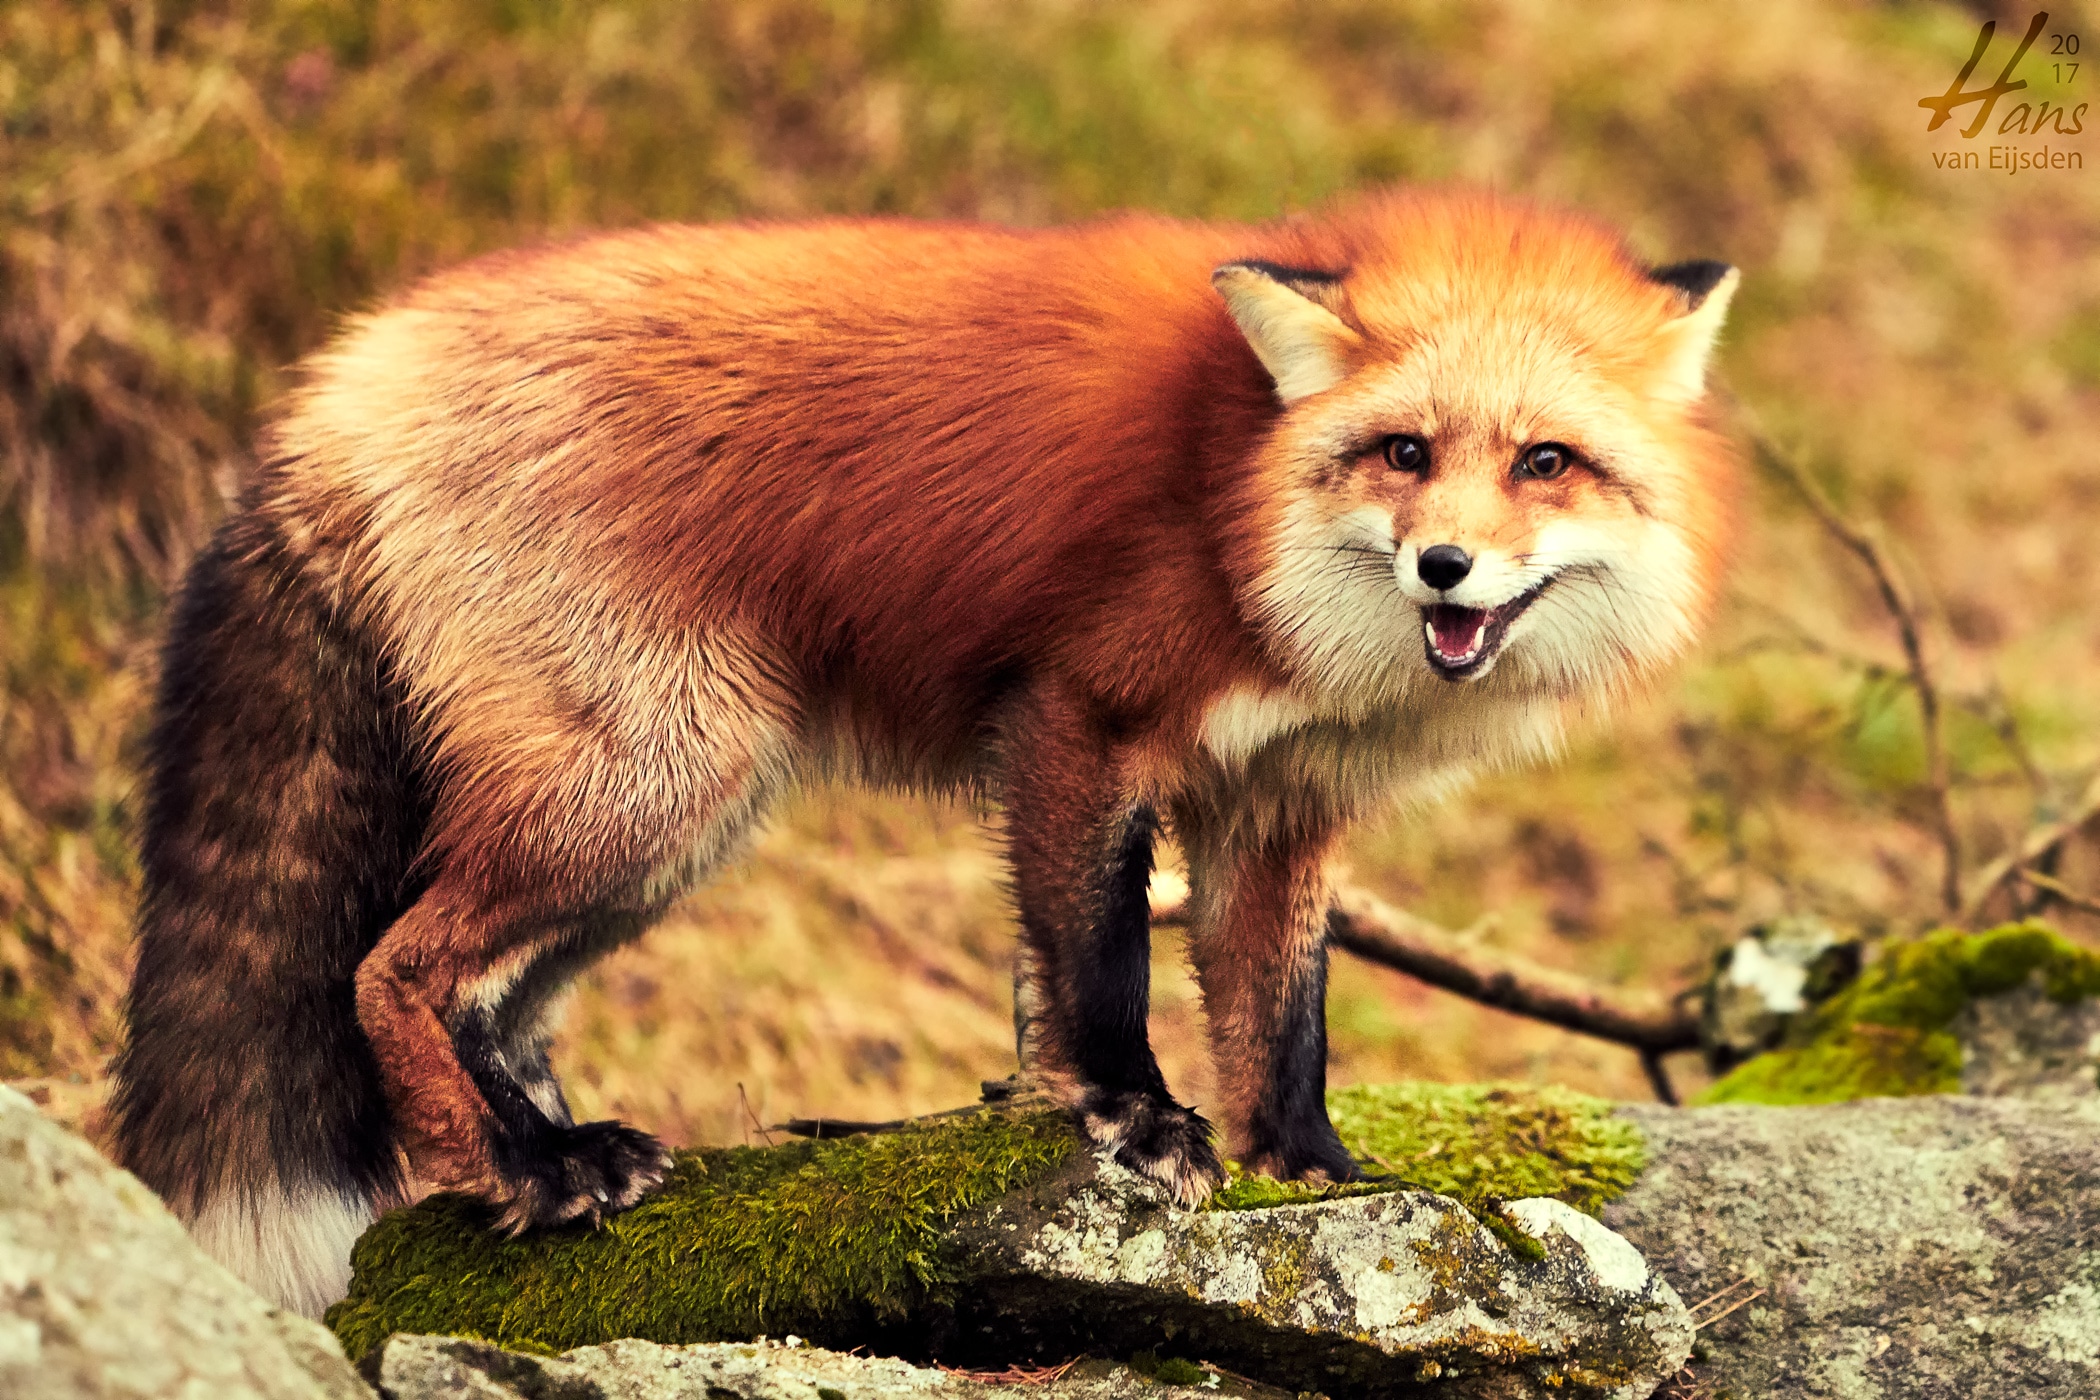 norwegian forest cat chasing fox